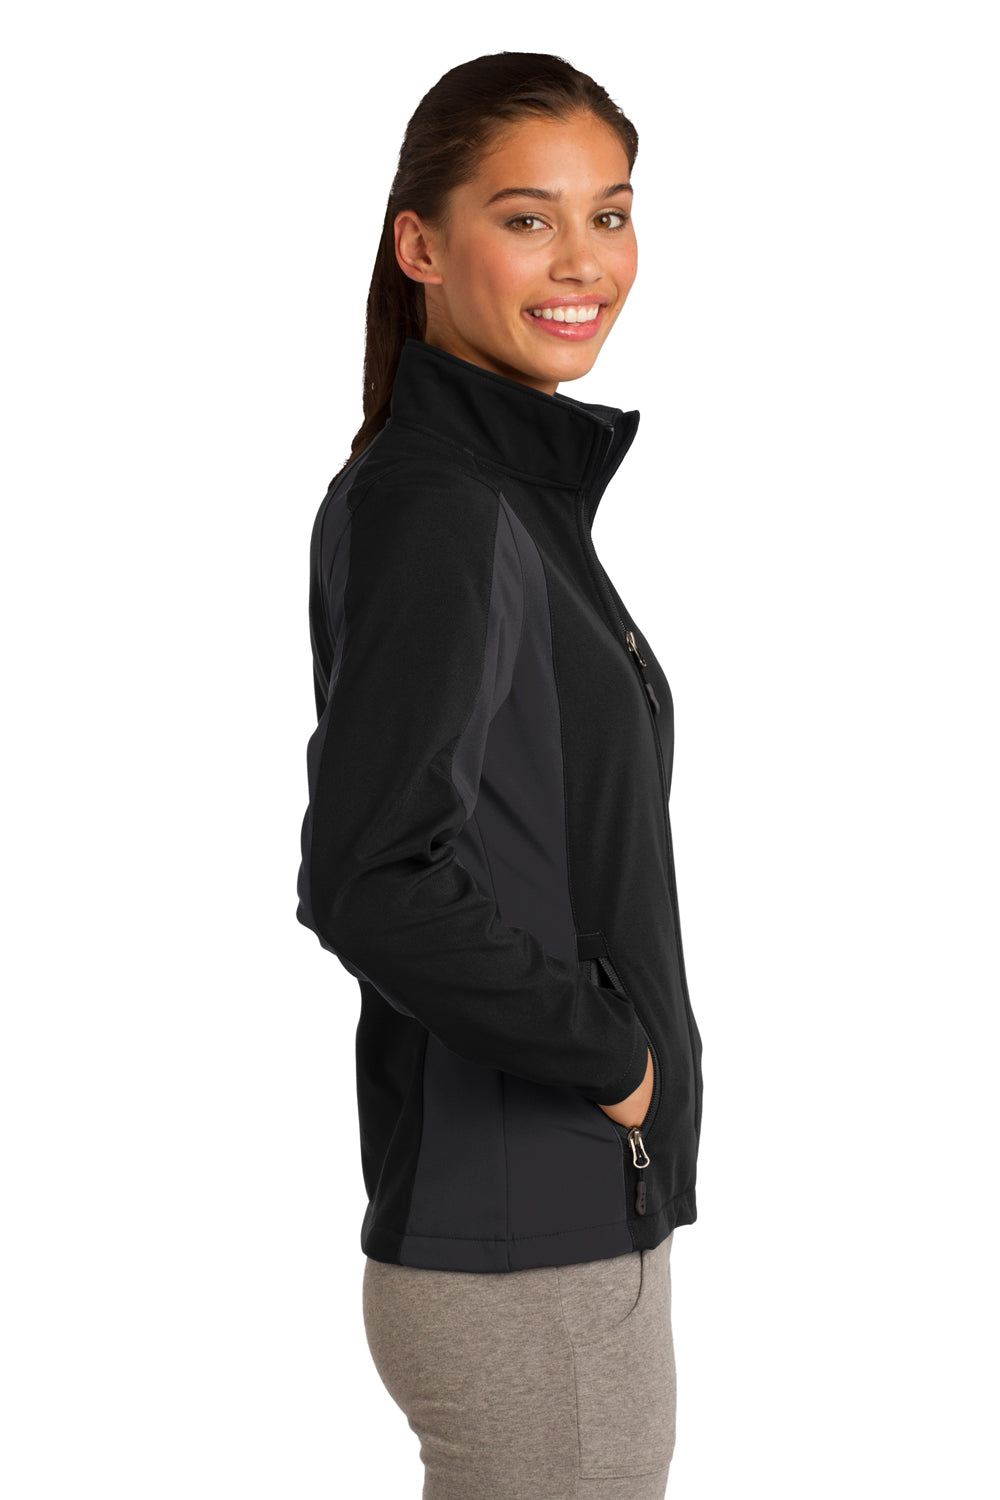 Sport-Tek LST970 Womens Water Resistant Full Zip Jacket Black/Grey Side